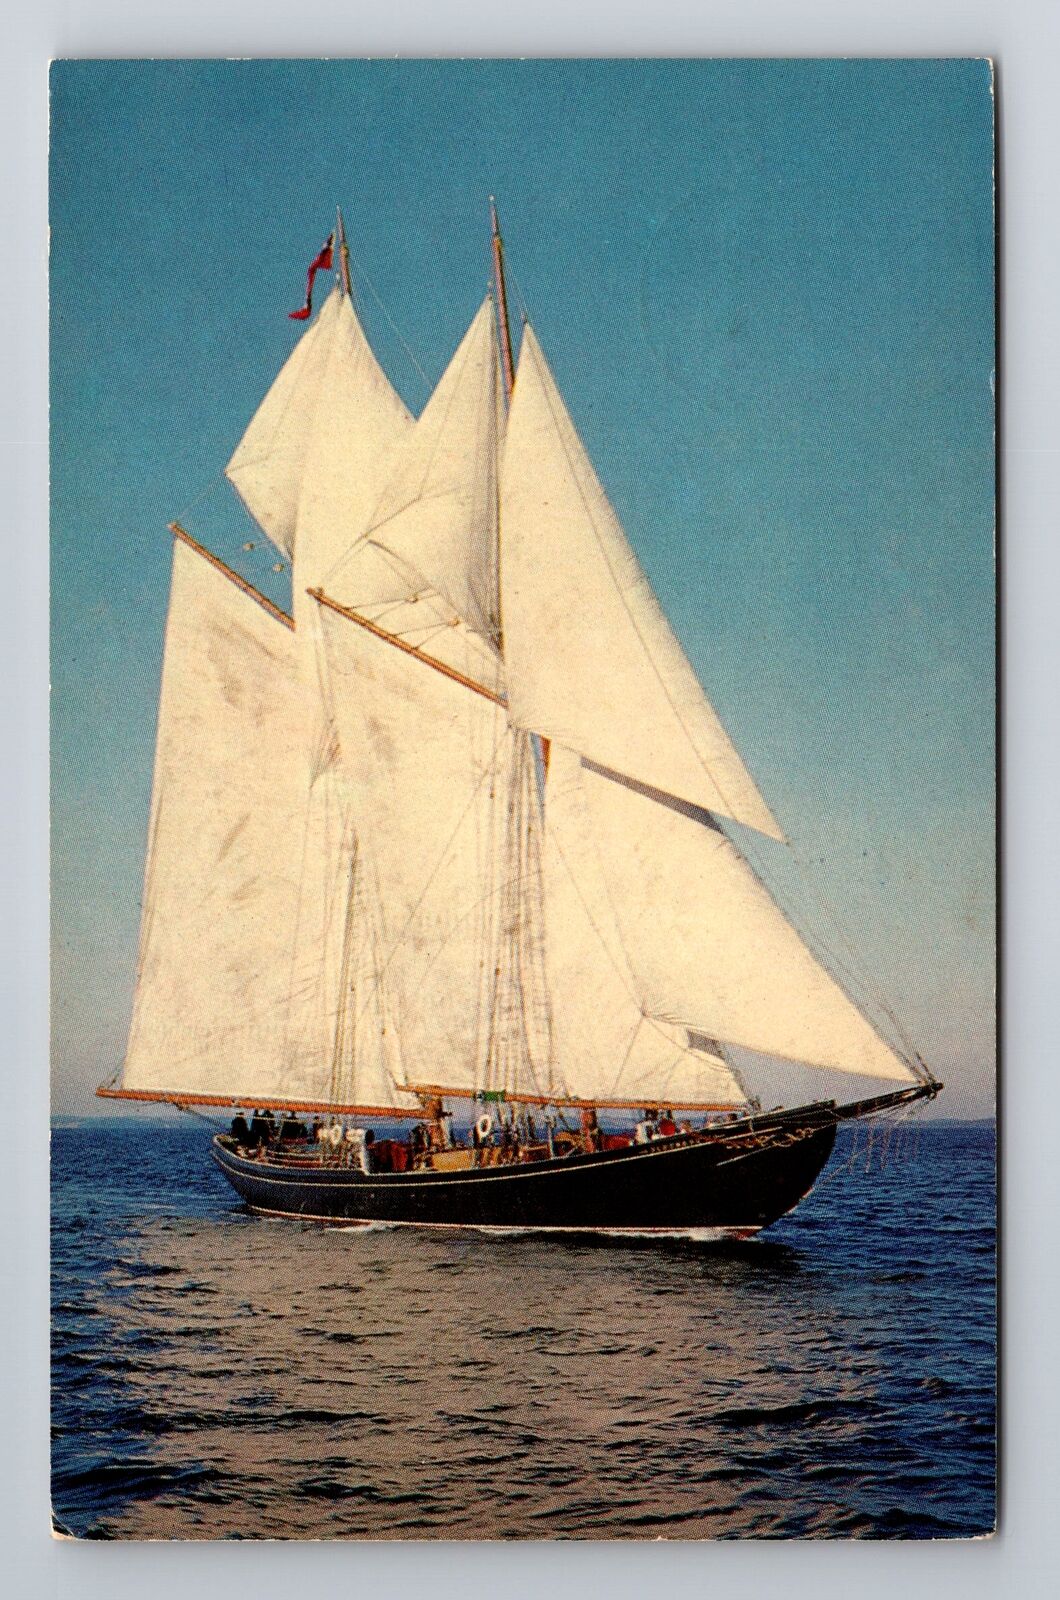 Lunenburg Nova Scotia-Canada, Bluenose II, Replica of Schooner, Vintage Postcard